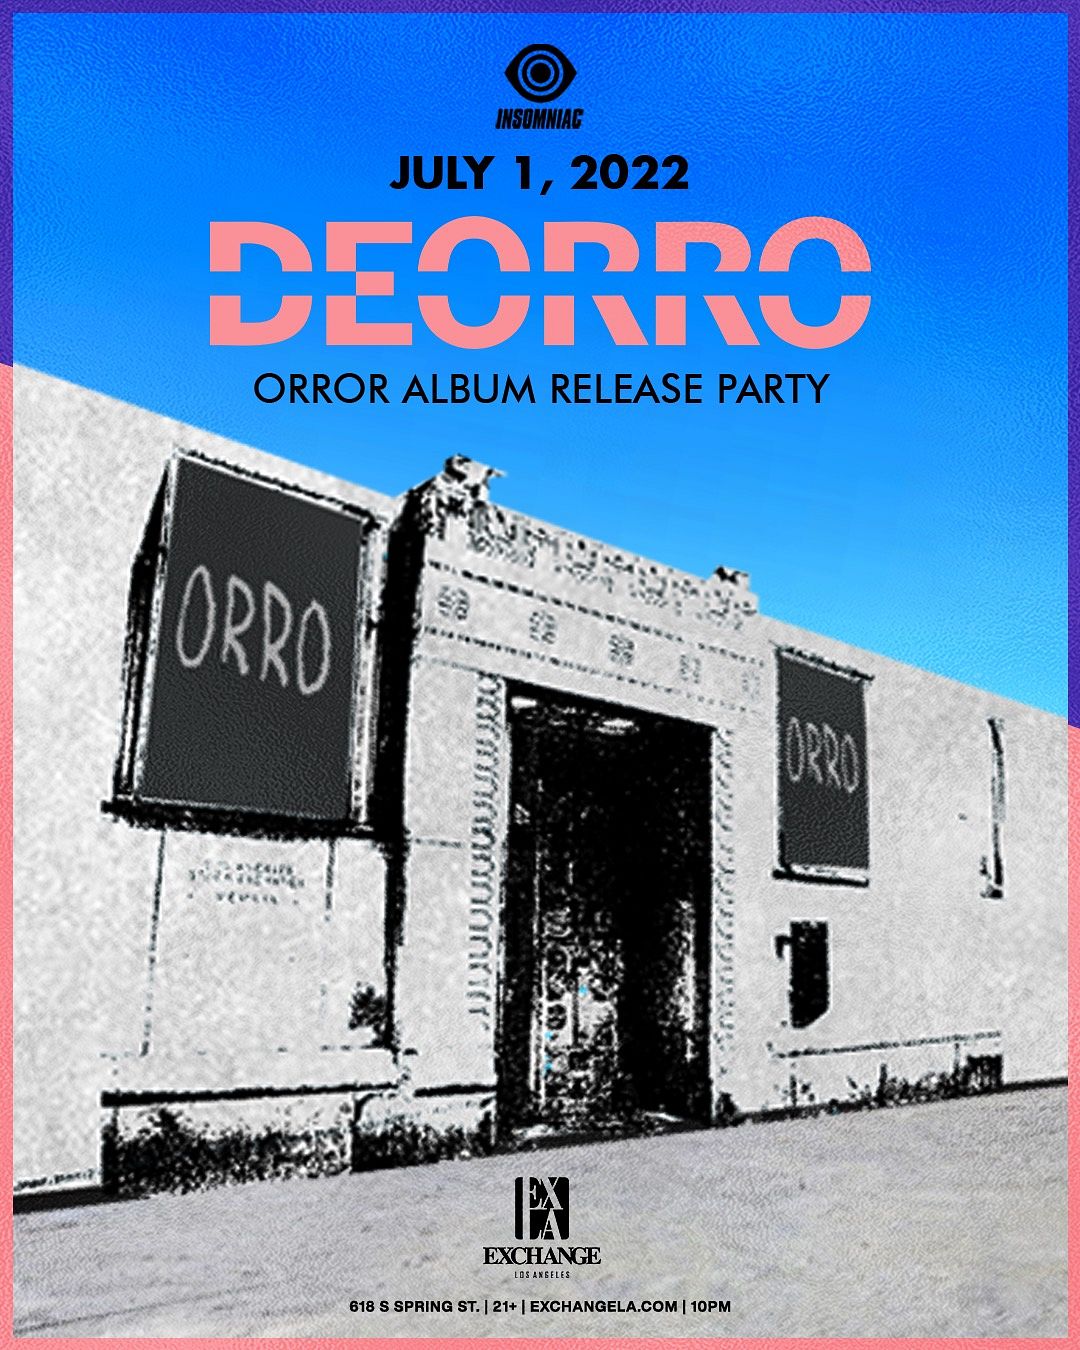 Deorro Orro Album Release Party Tickets at Exchange LA in Los Angeles